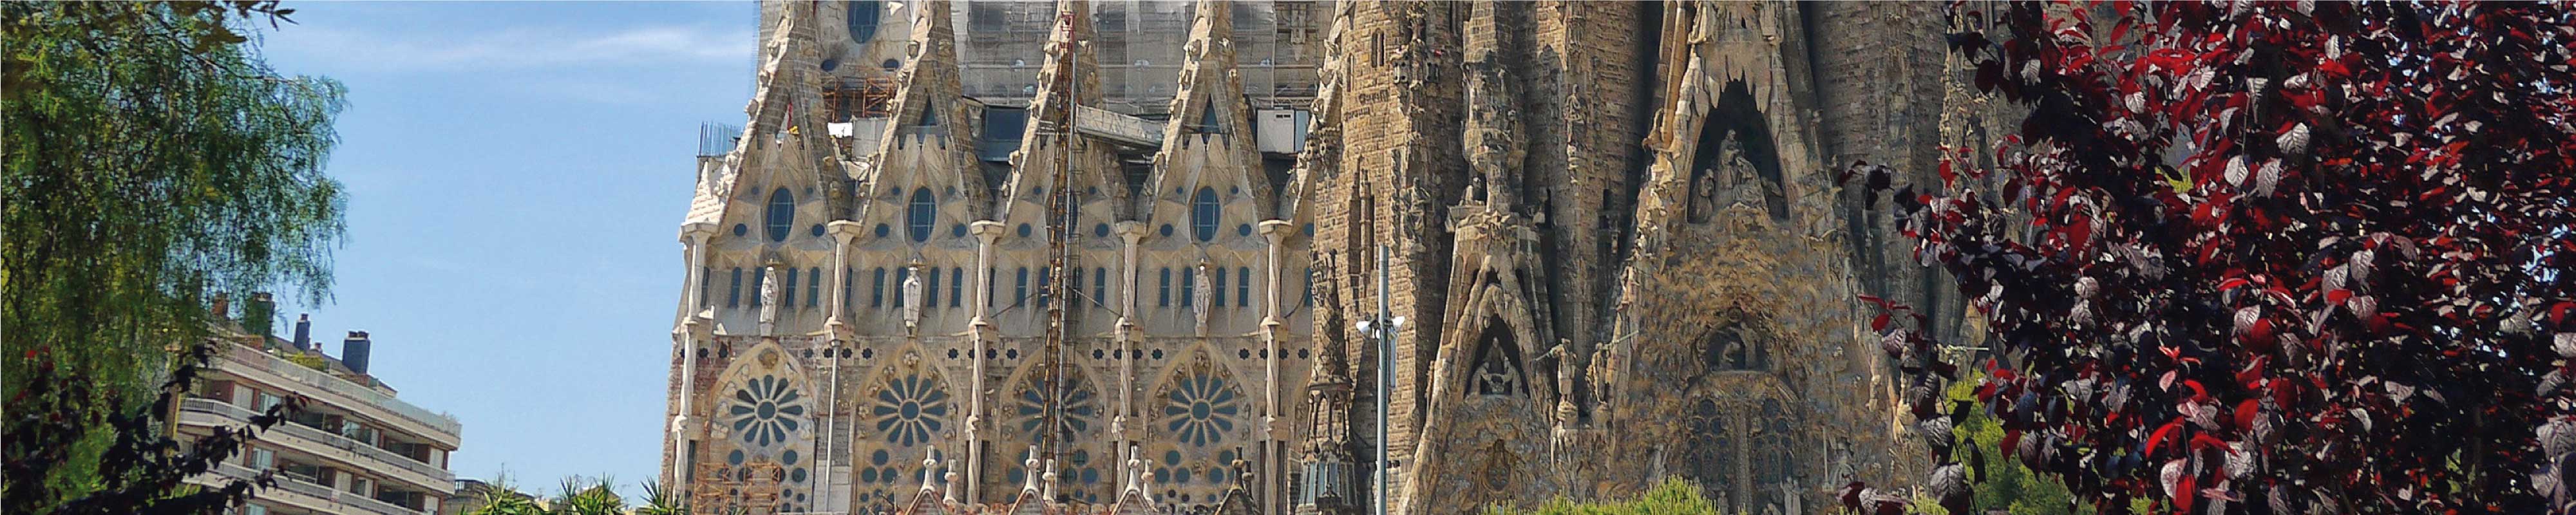 near the Sagrada Família